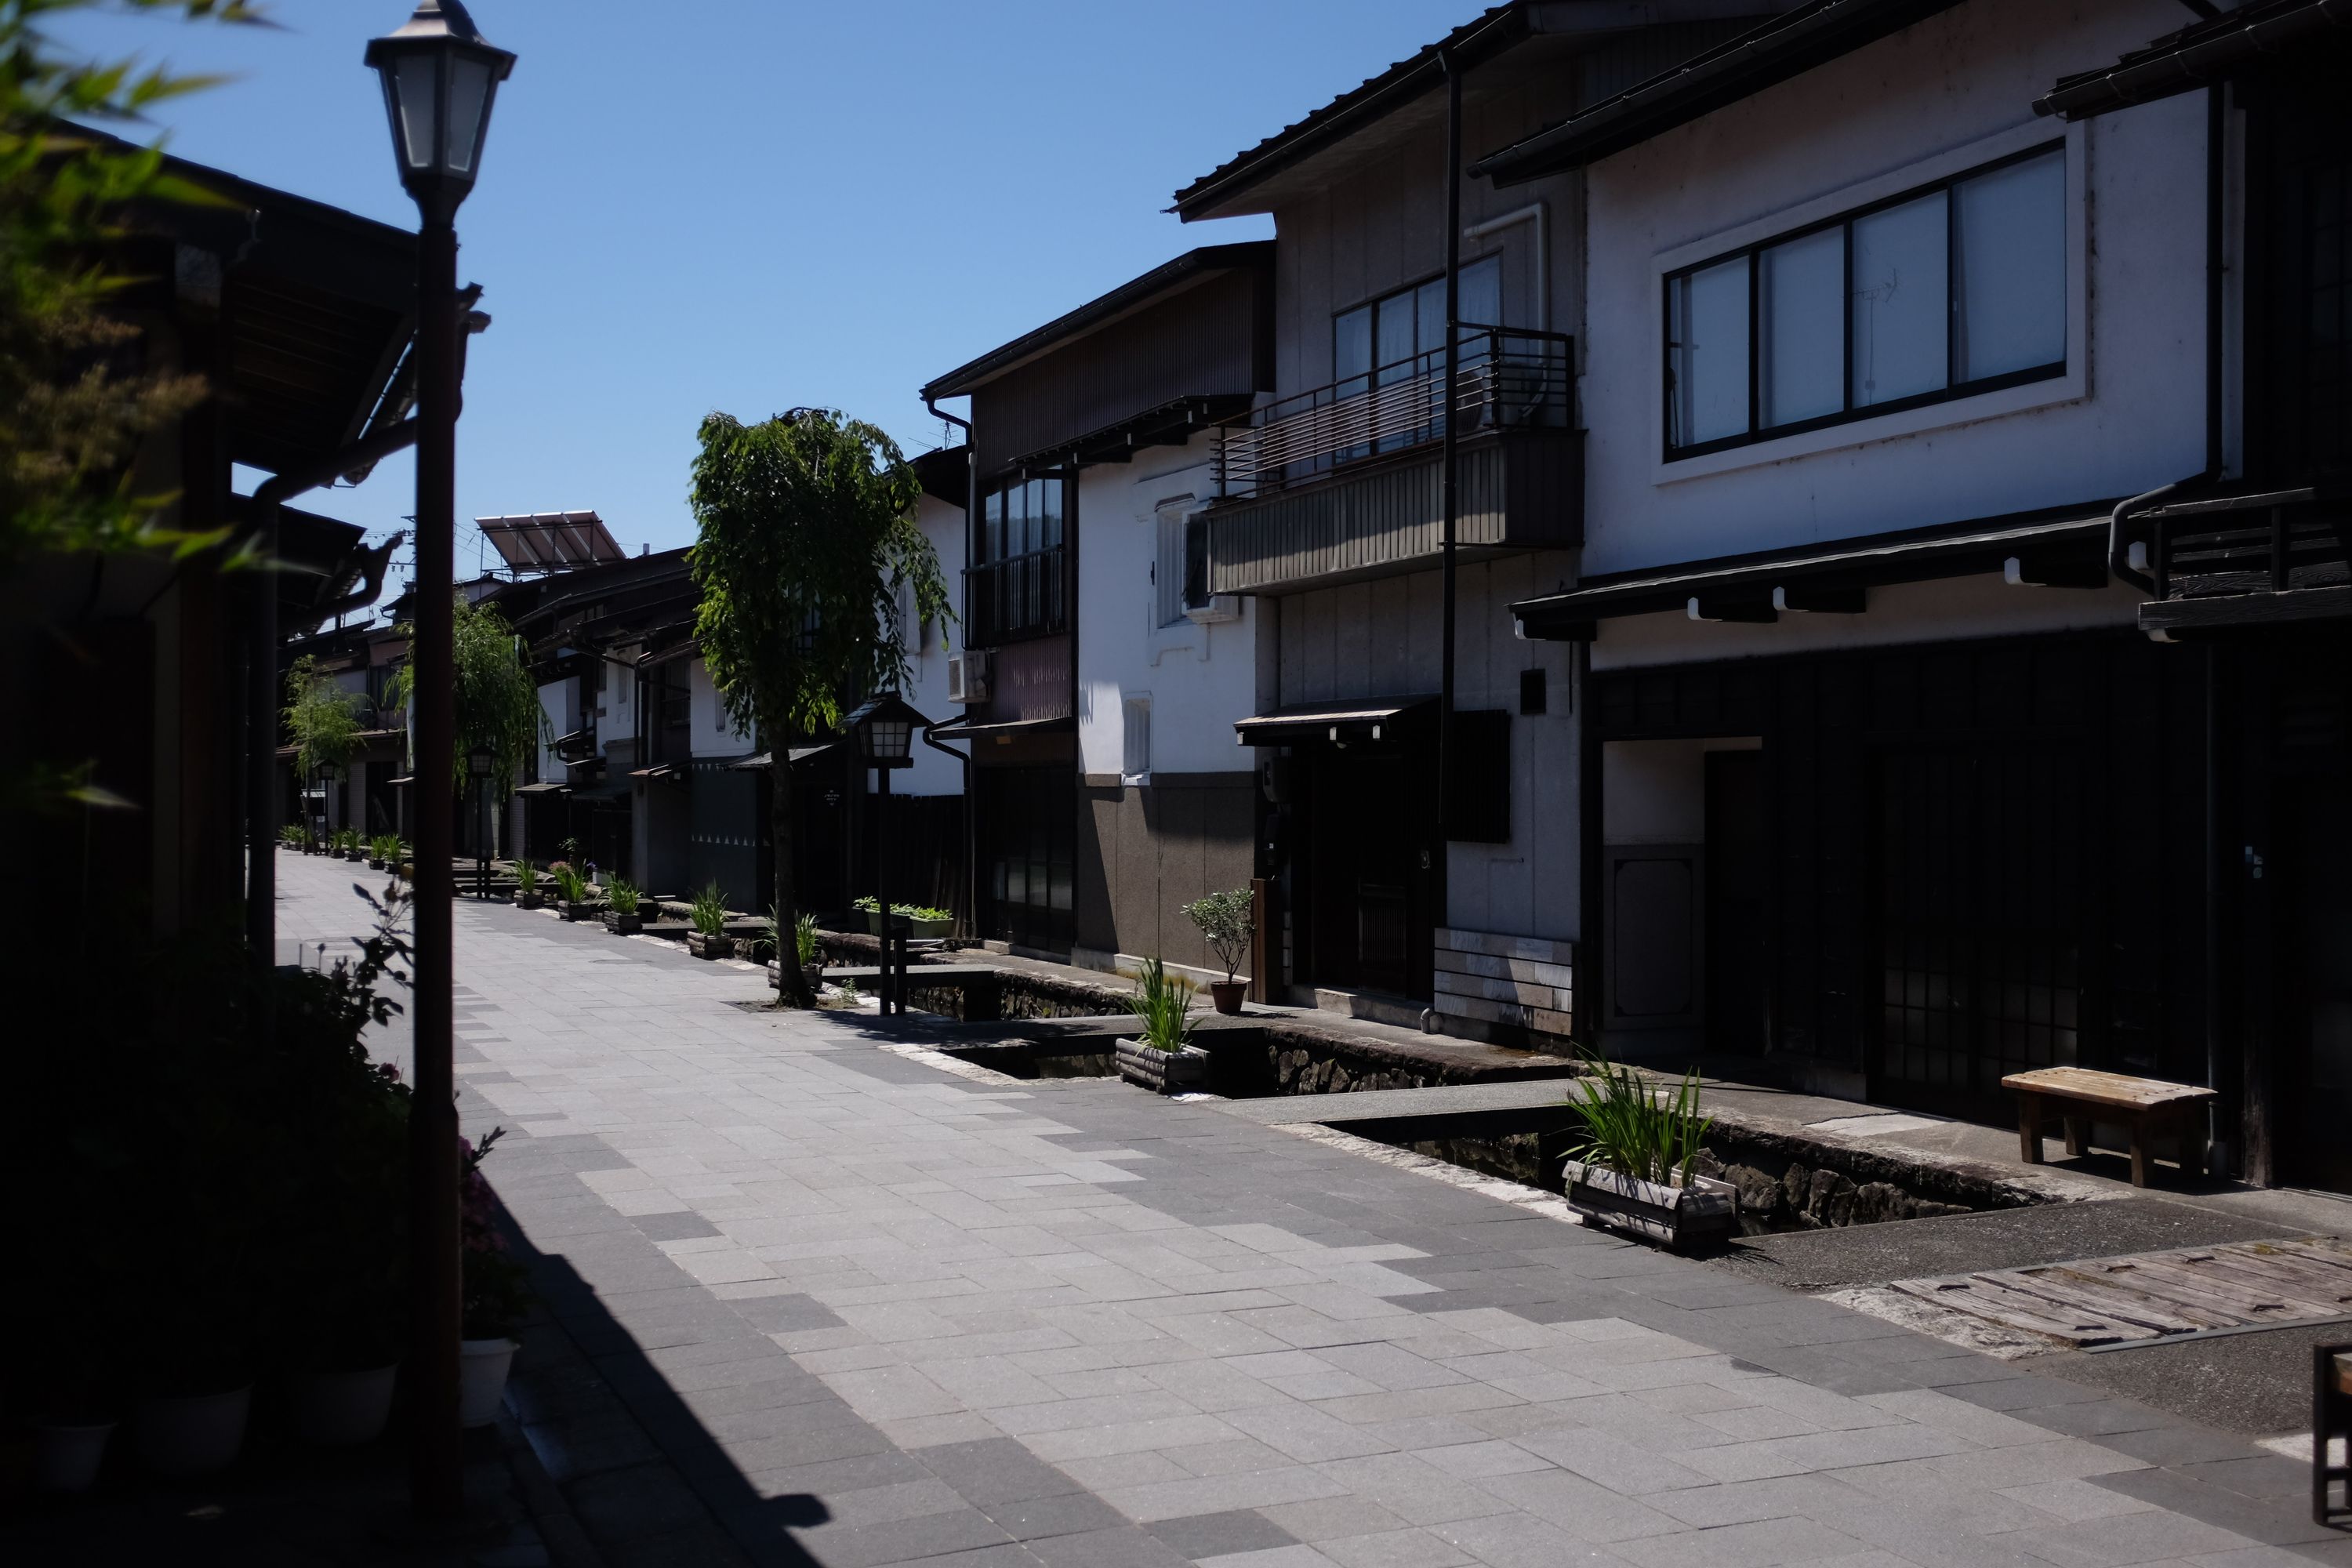 Traditional Hida-style Japanese houses on a street in Hida Furukawa, Gifu.